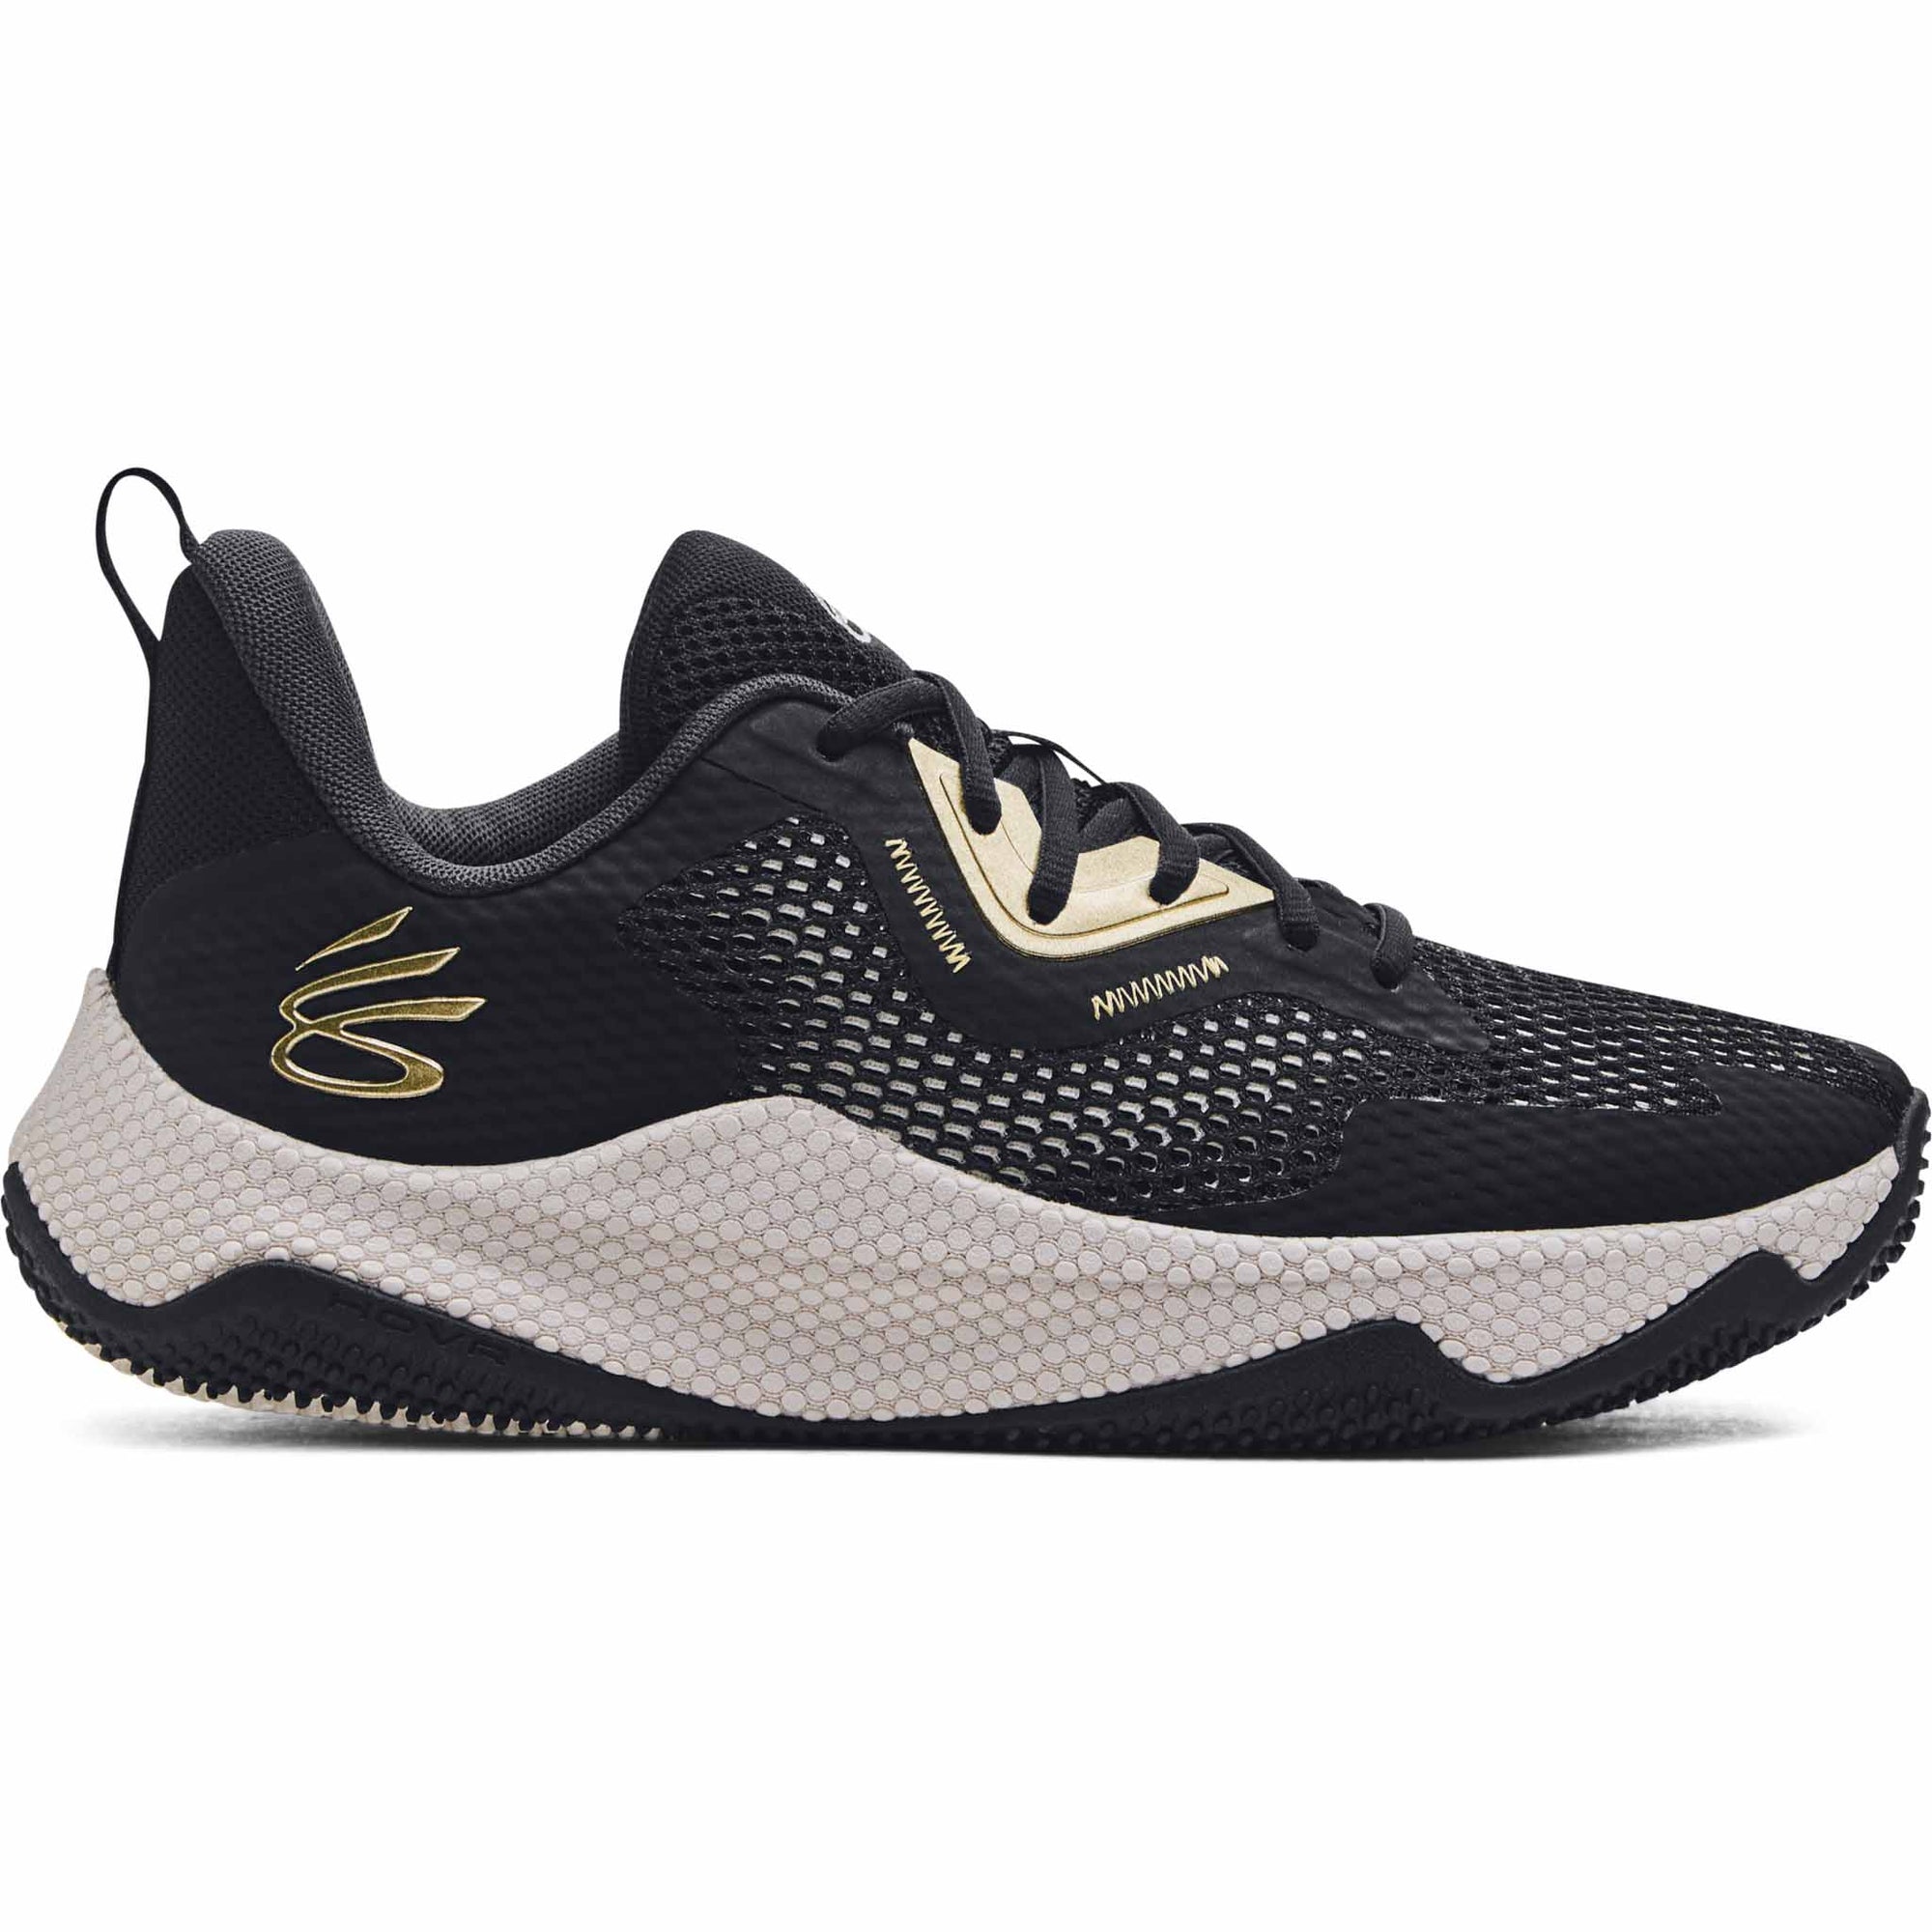 UA Curry Hovr Splash-3 chaussures de basketball - Noir / Gris / Or Métallique